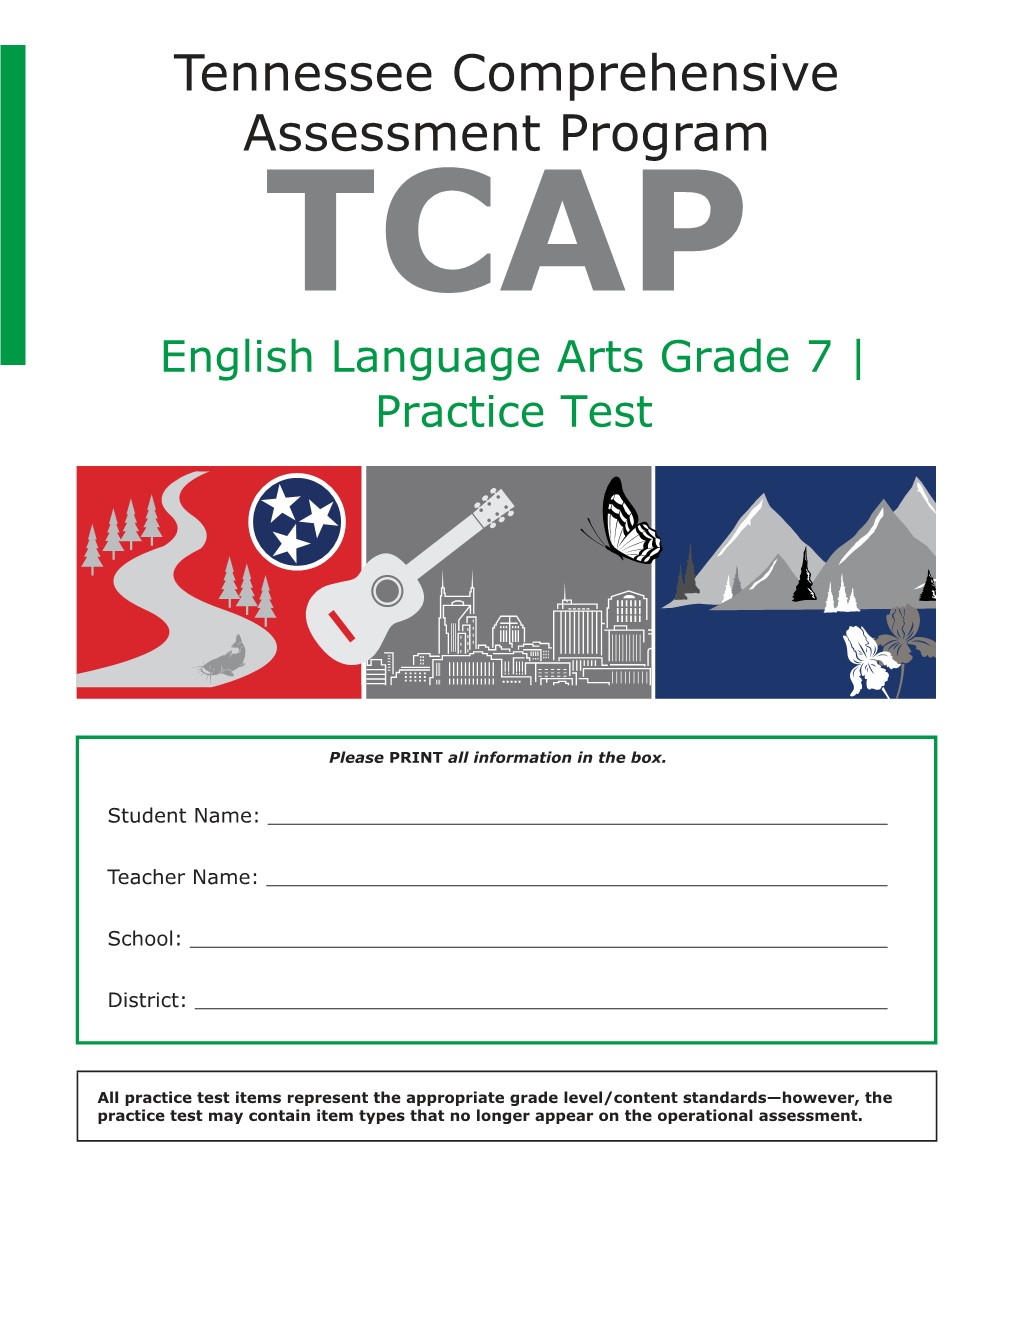 English Language Arts Grade 7 | Practice Test